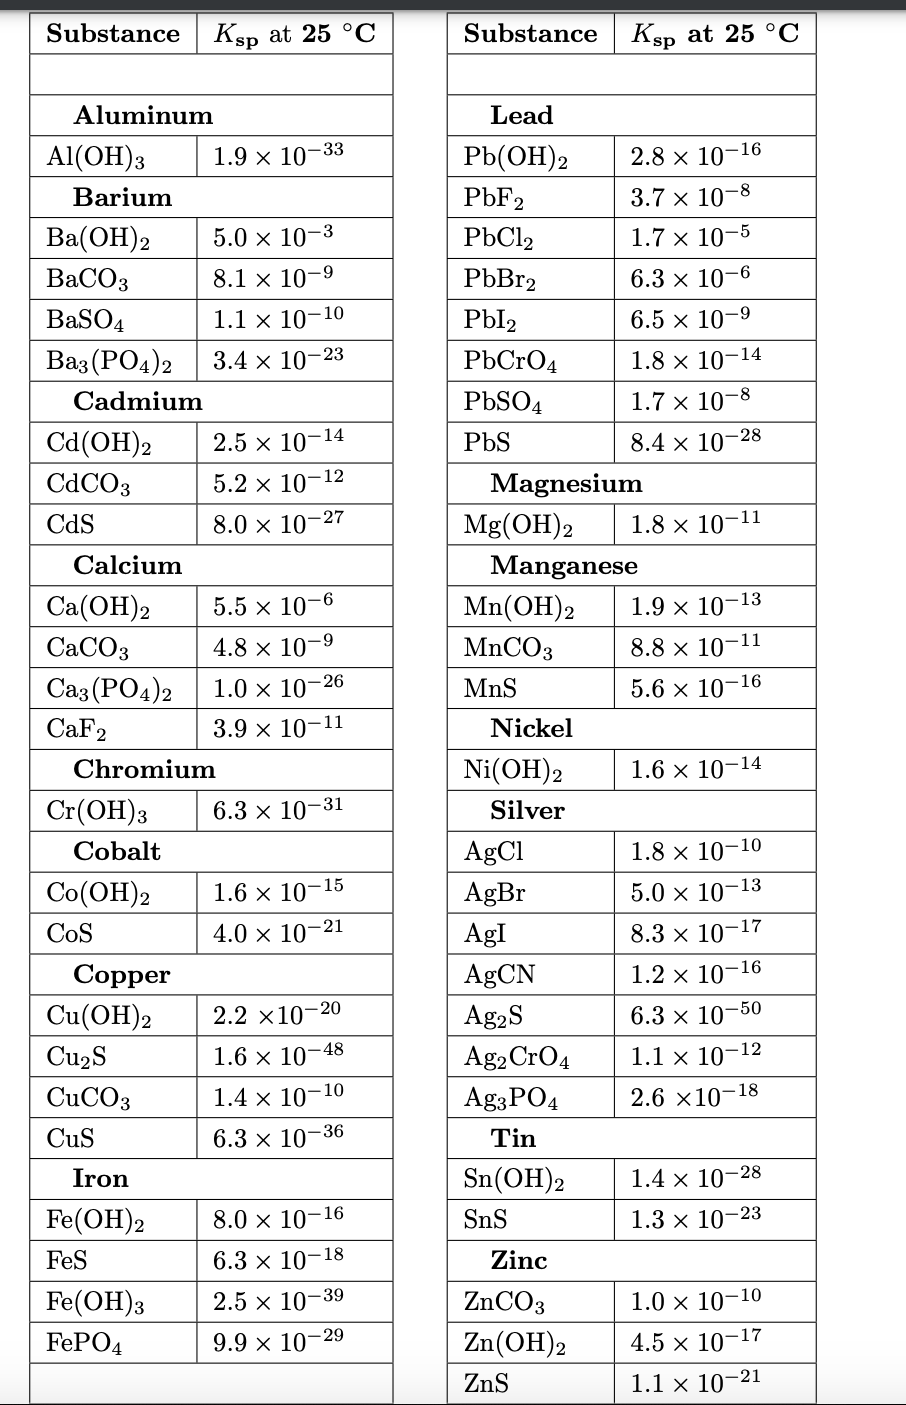 Substance Ksp at 25 °C
Aluminum
Al(OH)3
Barium
Ba(OH)2
BaCO3
BaSO4
Ba3(PO4)2
Cadmium
Cd (OH)2
CdCO3
CdS
Calcium
Ca(OH)2
CaCO3
Ca3(PO4)2
CaF2
Cr(OH)3
Cobalt
Co(OH)2
COS
Chromium
Copper
Cu(OH)2
Cu₂S
CuCO3
CuS
1.9 × 10-33
Iron
Fe(OH)2
FeS
Fe(OH)3
FePO4
5.0 × 10-3
8.1 x 10-9
1.1 x 10-10
3.4 x 10-23
2.5 × 10-14
5.2 x 10-12
8.0 × 10-27
5.5 x 10-6
4.8 × 10-9
1.0 × 10-26
3.9 × 10-11
6.3 × 10-31
1.6 × 10-15
4.0 × 10-21
2.2 ×10-20
1.6 × 10-48
1.4 x 10-10
6.3 × 10-36
8.0 × 10-16
6.3 × 10-18
2.5 × 10-39
9.9 × 10-29
Substance
Lead
Pb(OH)2
PbF2
PbCl2
PbBr2
PbI2
PbCrO4
PbSO4
PbS
Mg(OH)2
Magnesium
Mn(OH)2
MnCO3
MnS
Nickel
Manganese
Ni(OH)2
Silver
AgCl
AgBr
AgI
AgCN
Ag₂S
Ag2 CrO 4
Ksp at 25 °C
Ag3PO4
Tin
Sn(OH)2
SnS
2.8 x 10-1
-16
3.7 x 10-8
1.7 x 10-5
6.3 x 10-6
6.5 × 10-9
1.8 × 10-14
1.7 x 10-8
8.4 x 10-28
Zinc
ZnCO3
Zn(OH)2
ZnS
1.8 × 10-11
1.9 × 10-13
8.8 x 10-1
-11
5.6 × 10-16
1.6 × 10-14
1.8 x 10-10
5.0 × 10-13
8.3 x 10-1
-17
1.2 × 10-16
6.3 × 10-50
1.1 x 10-12
2.6 ×10-18
1.4 x 10-28
1.3 × 10-23
1.0 × 10-10
4.5 × 10-17
1.1 x 10-21